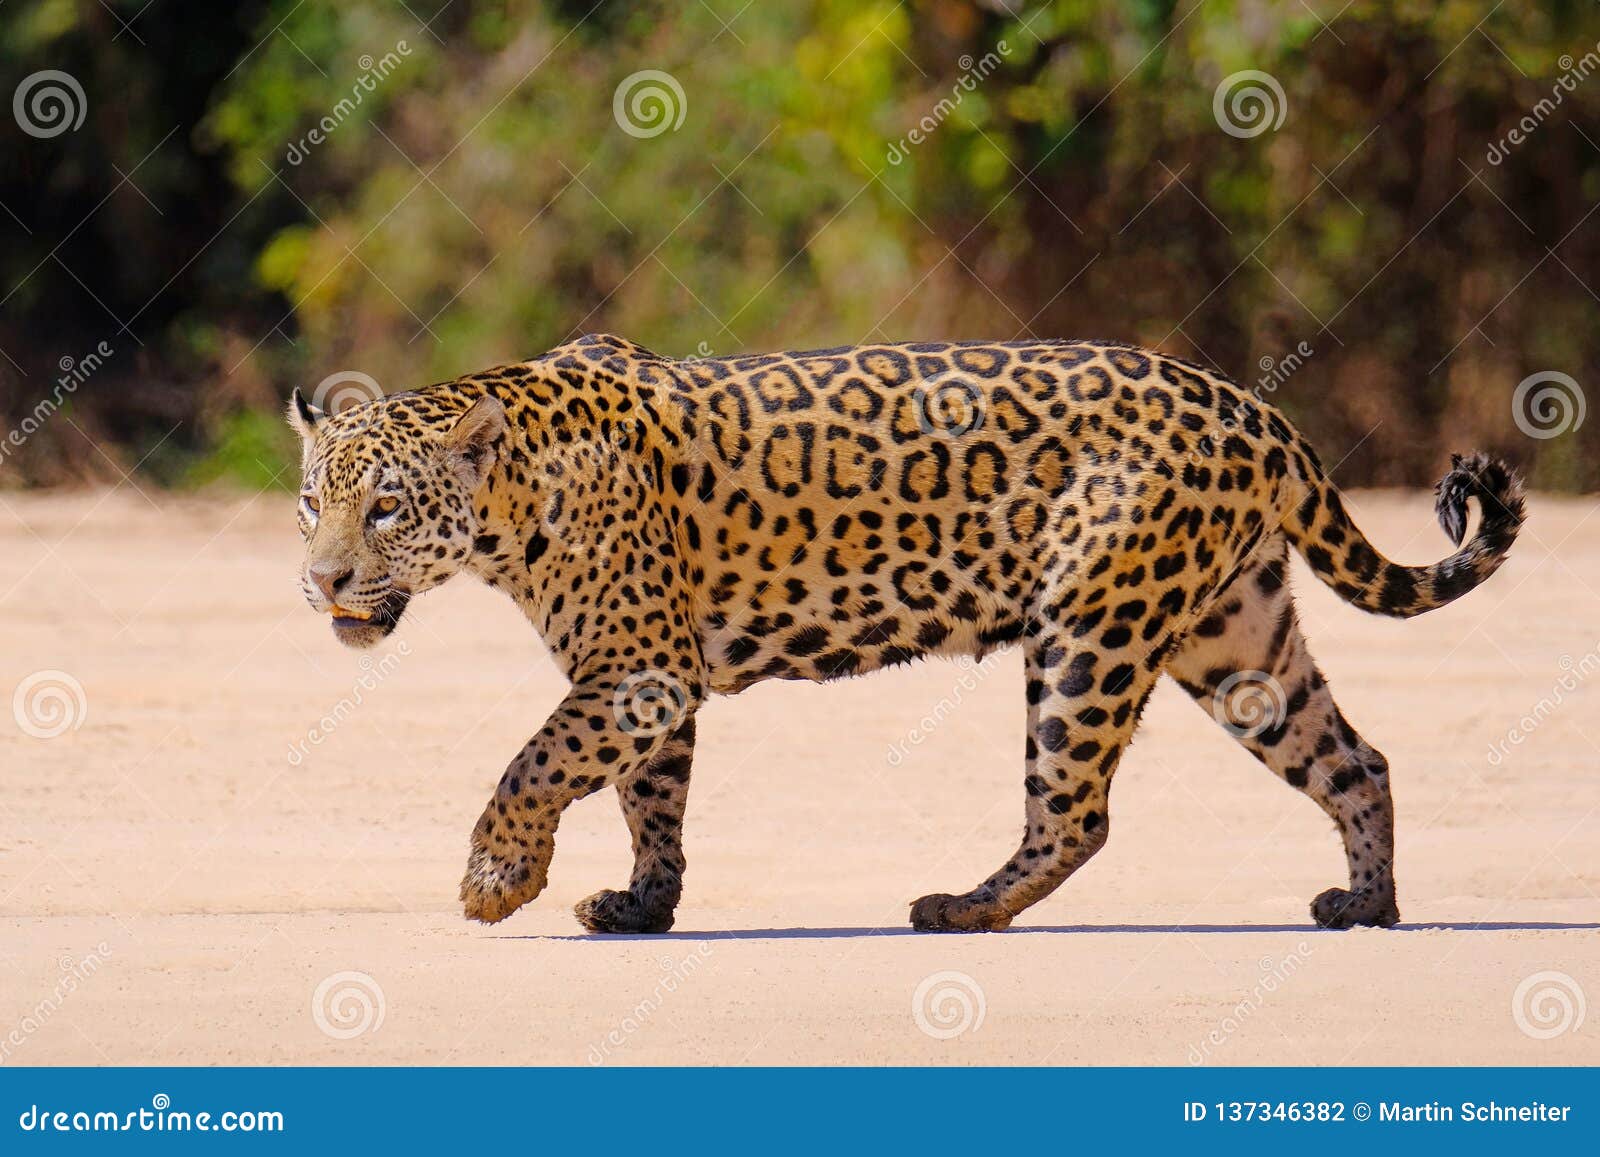 jaguar, panthera onca, female, cuiaba river, porto jofre, pantanal matogrossense, mato grosso do sul, brazil